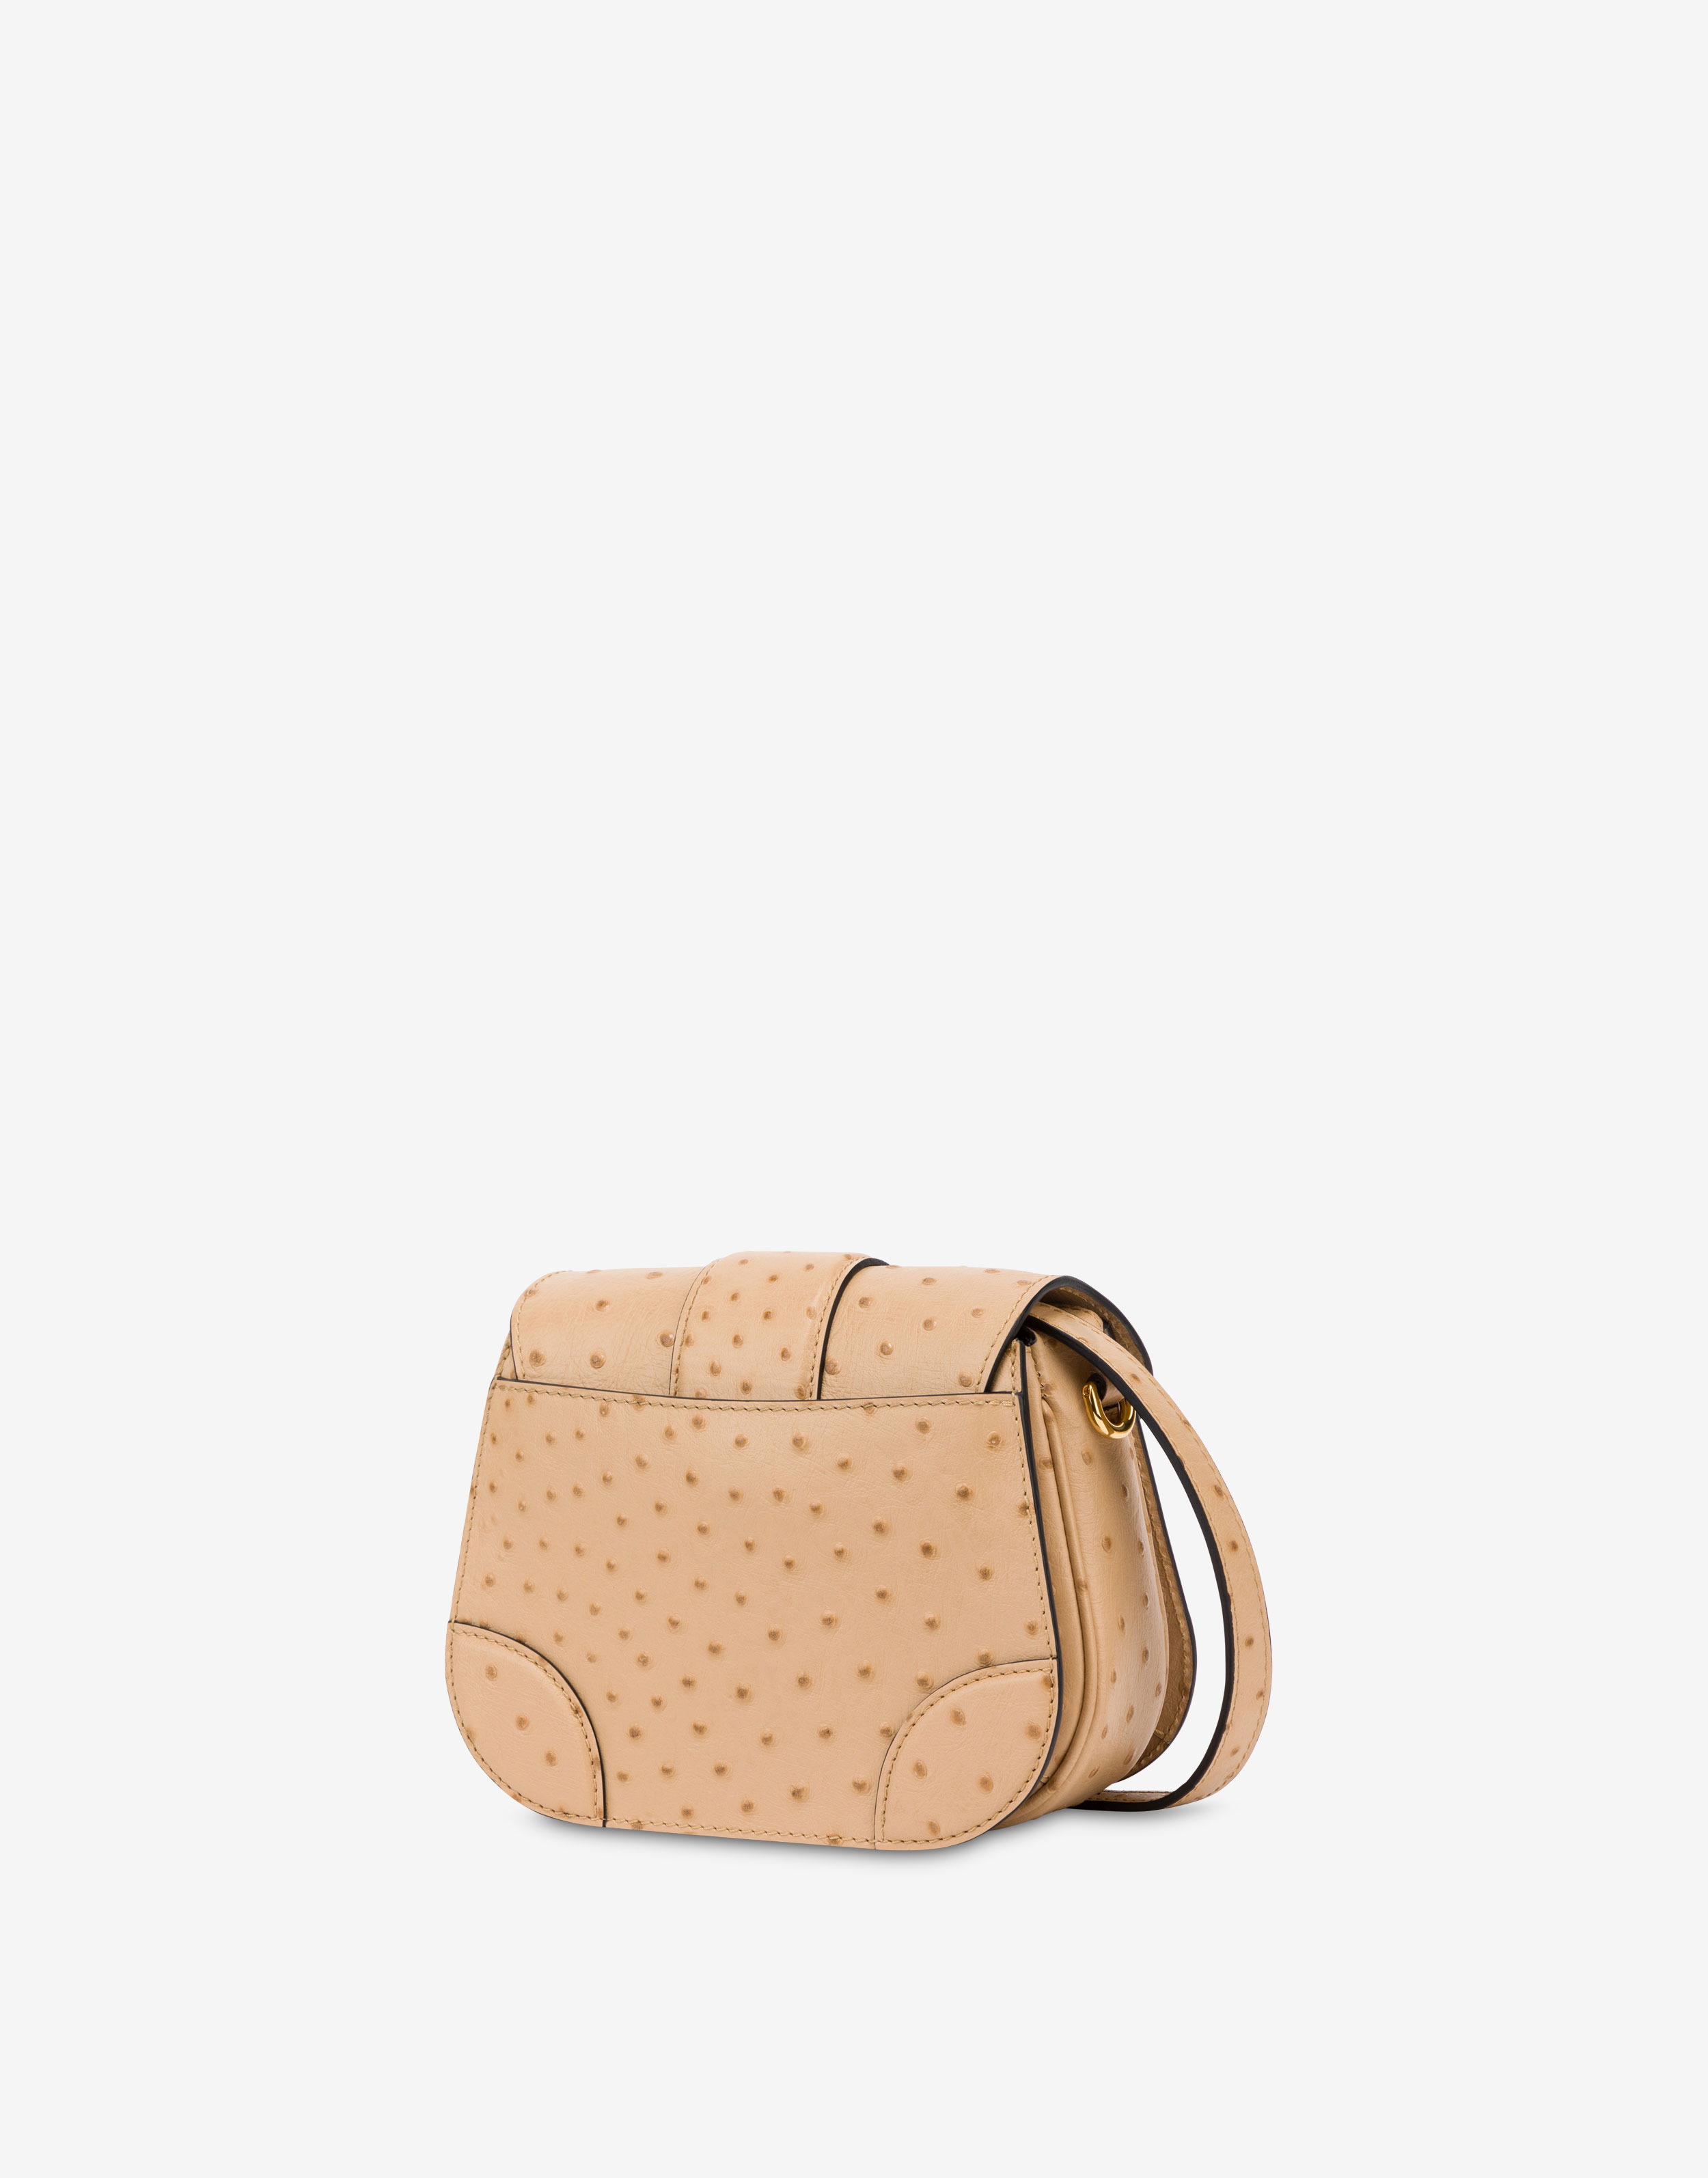 Travel Tag handbag with ostrich print